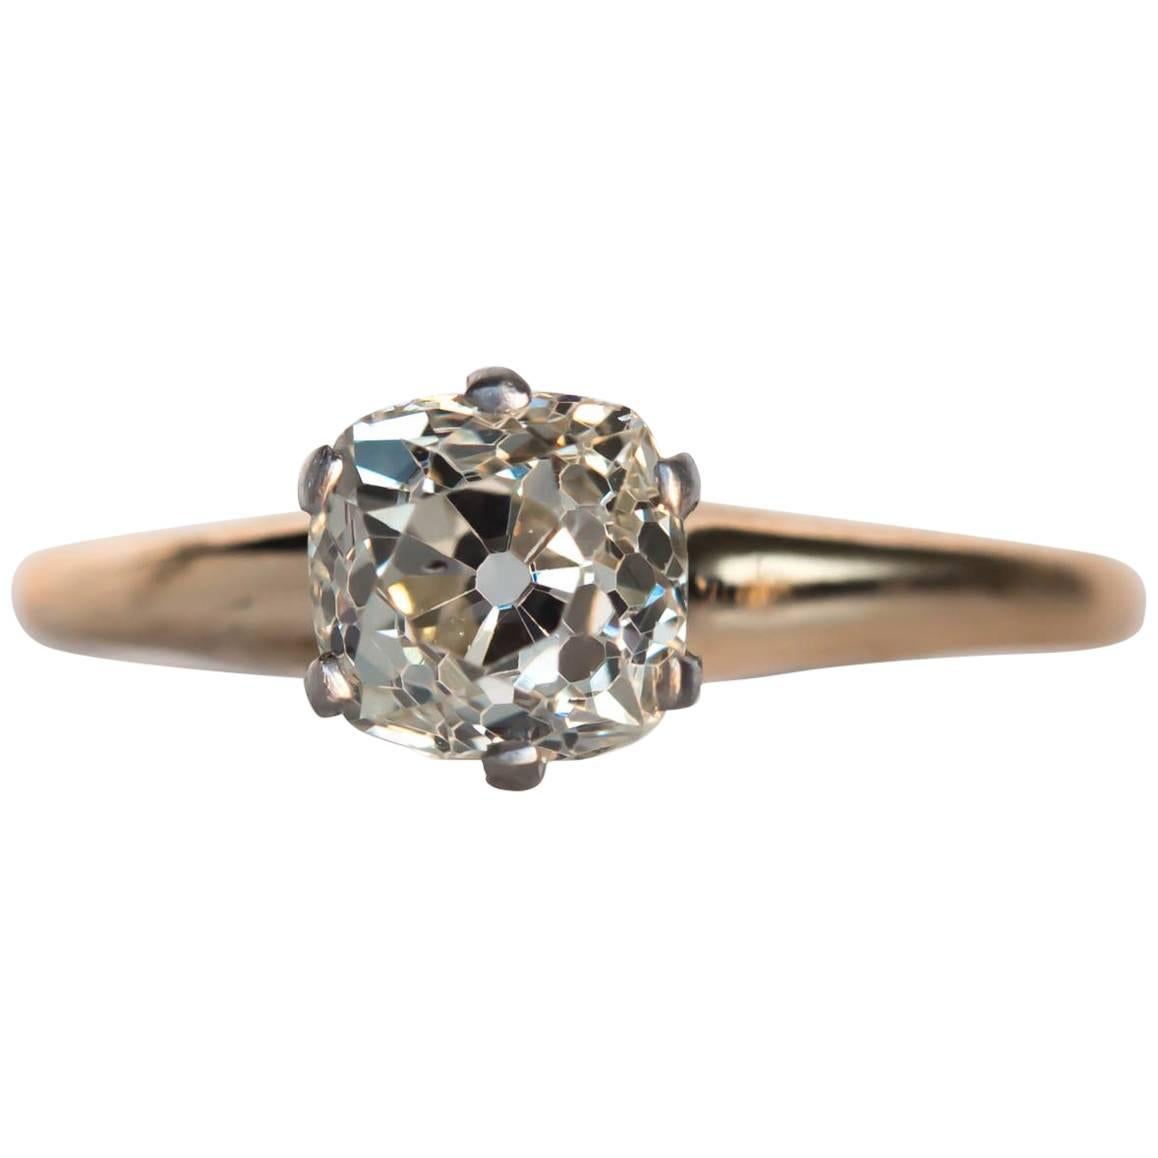 1900s Edwardian Yellow Gold and Platinum 1.26 Carat Diamond Engagement Ring